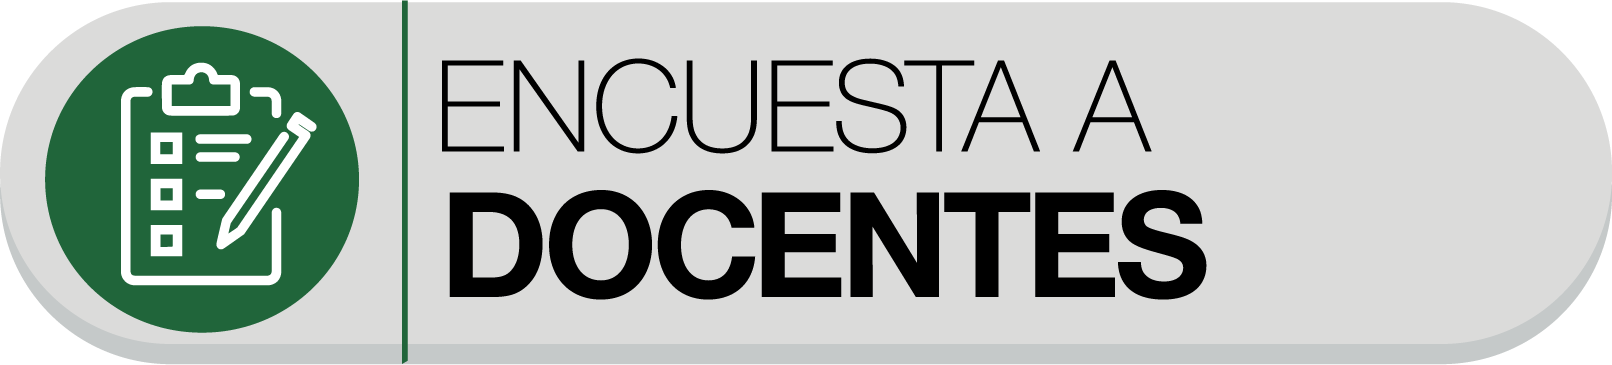 ENCUESTA A DOCENTES-02.png